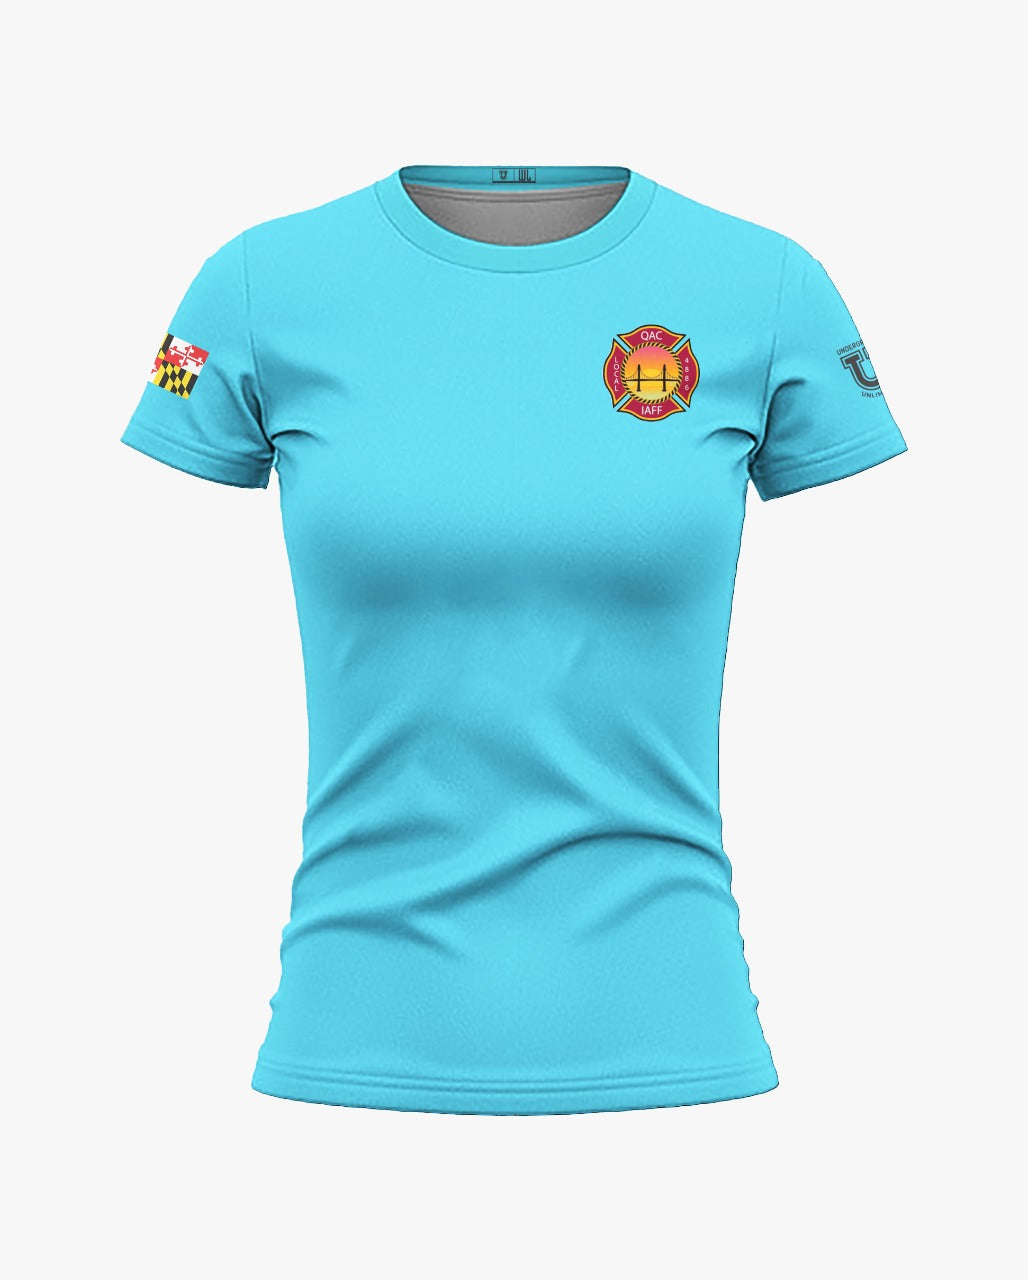 Women's Local 4886 Island TIme Dri Tech Short Sleeve Shirt